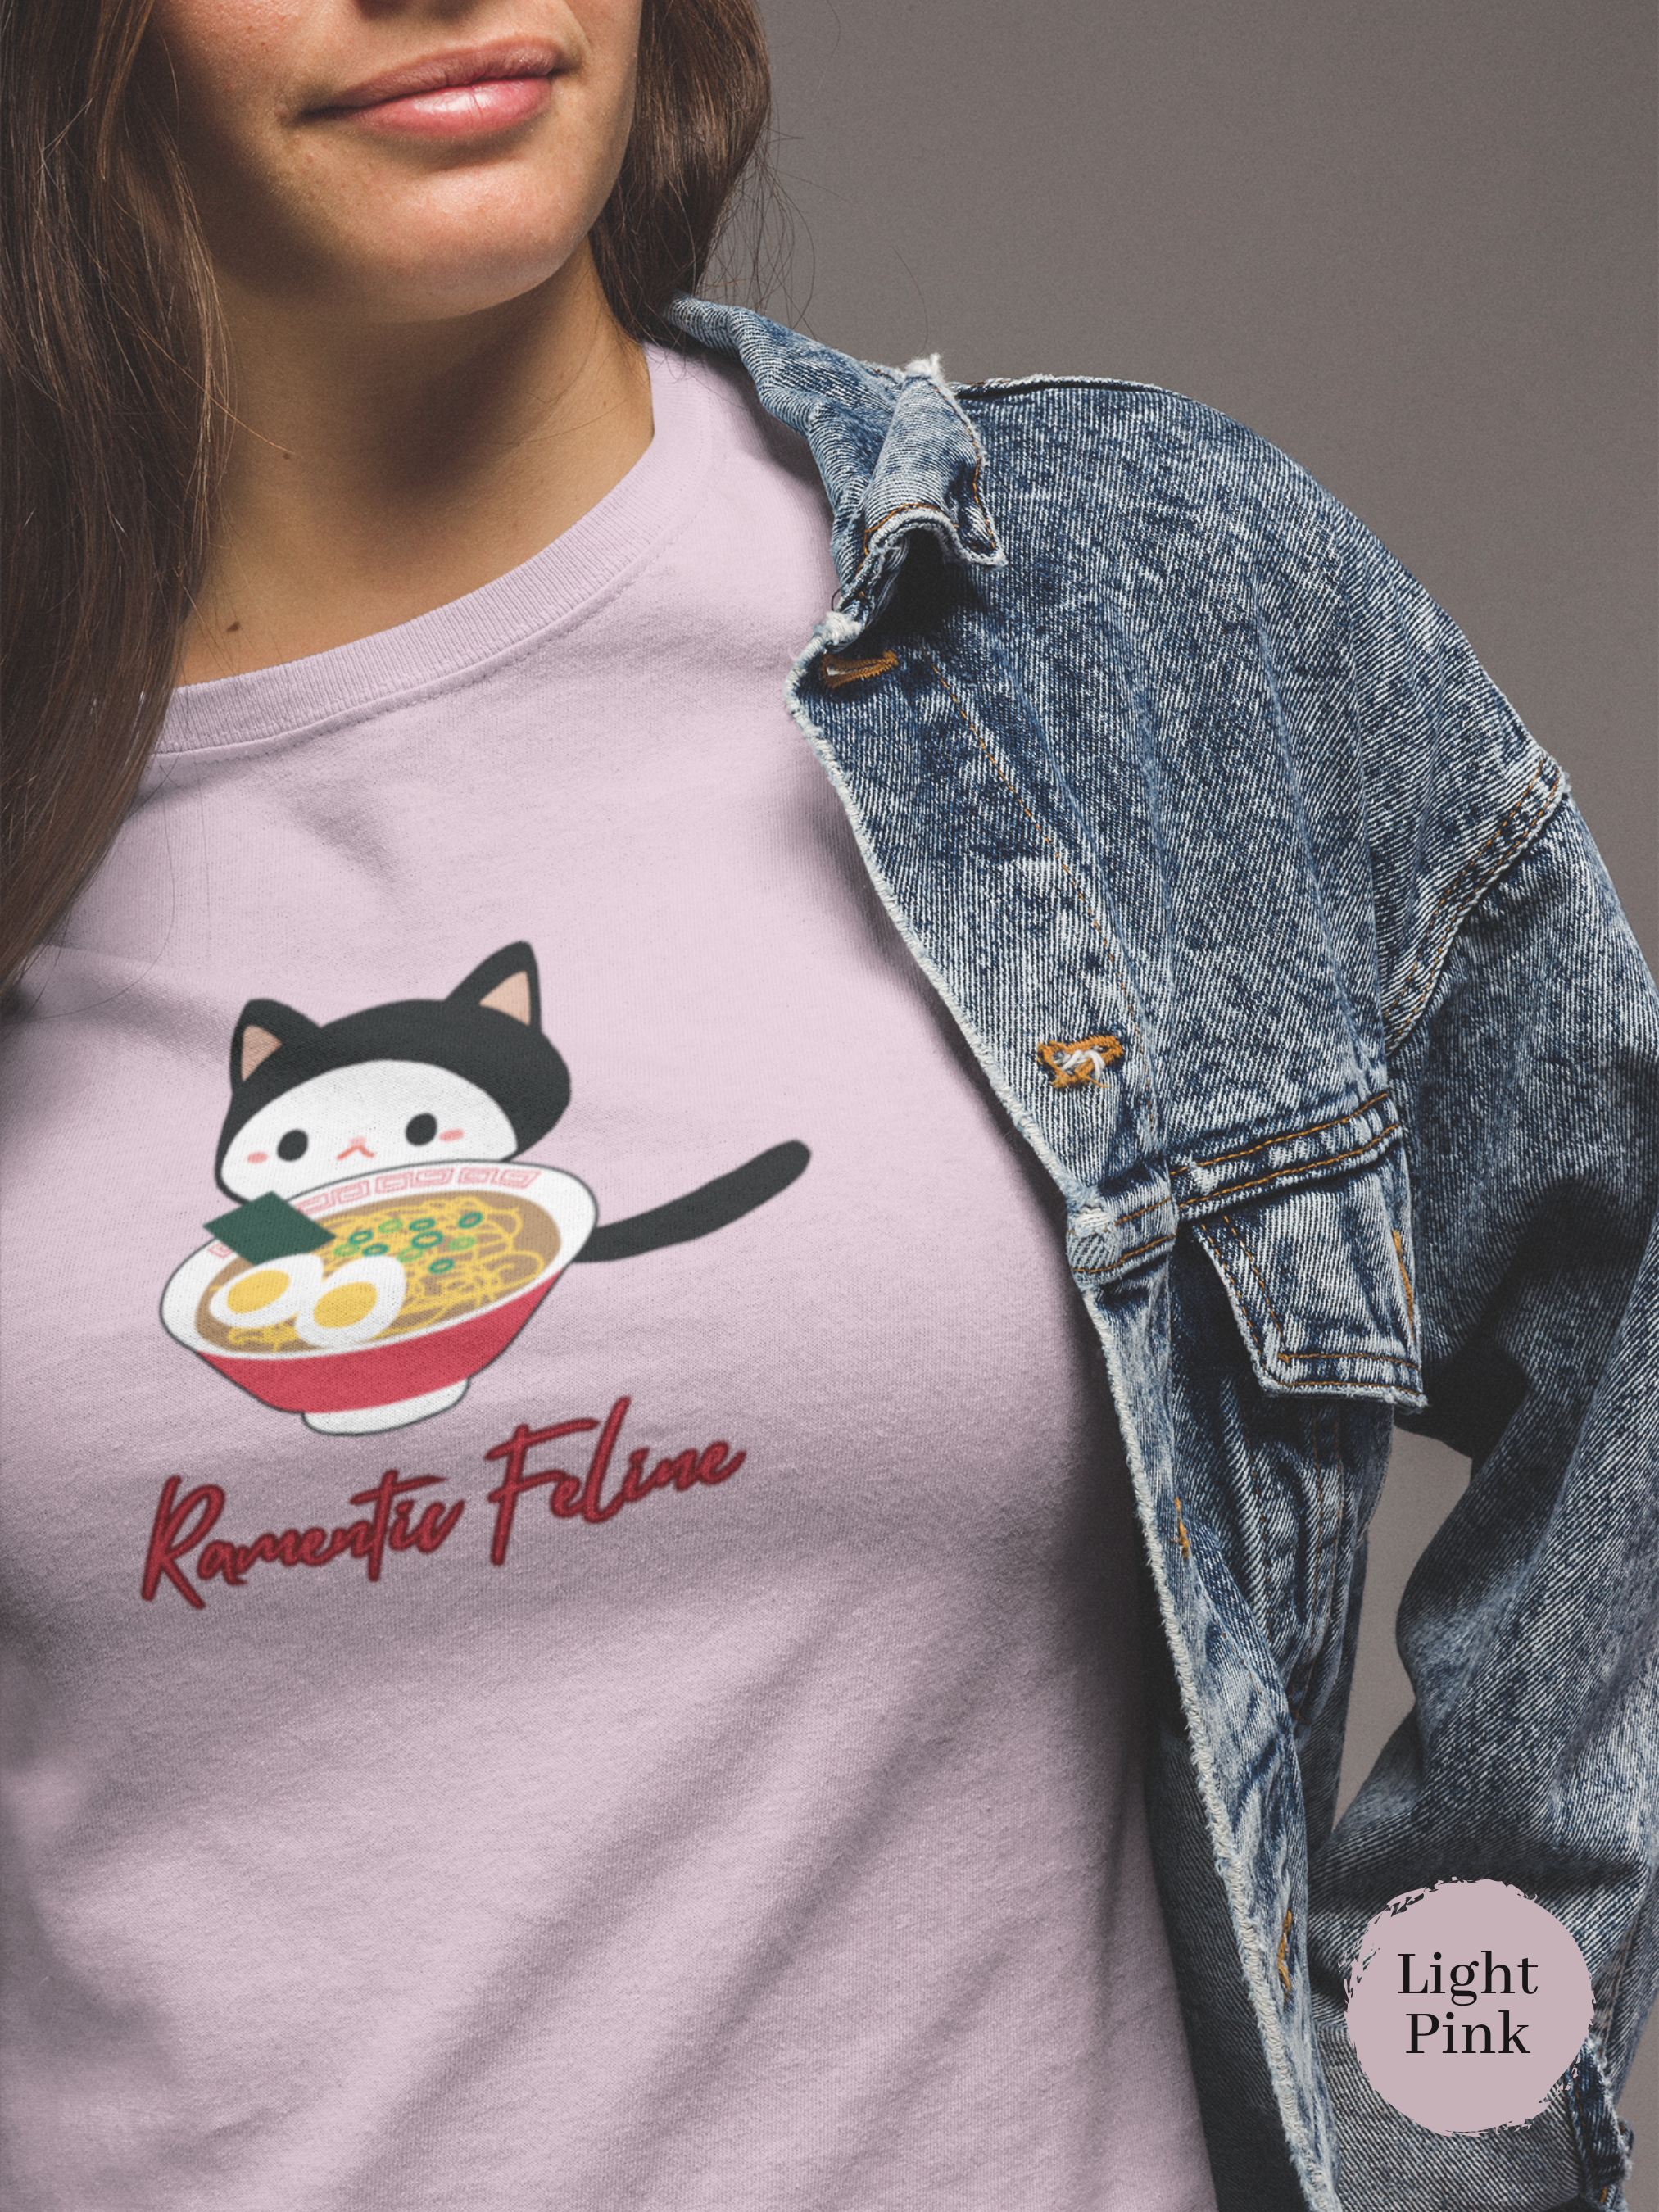 Ramen T-Shirt: Ramentic Feline - Adorable Cat and Ramen Art for Japanese Foodie Lovers